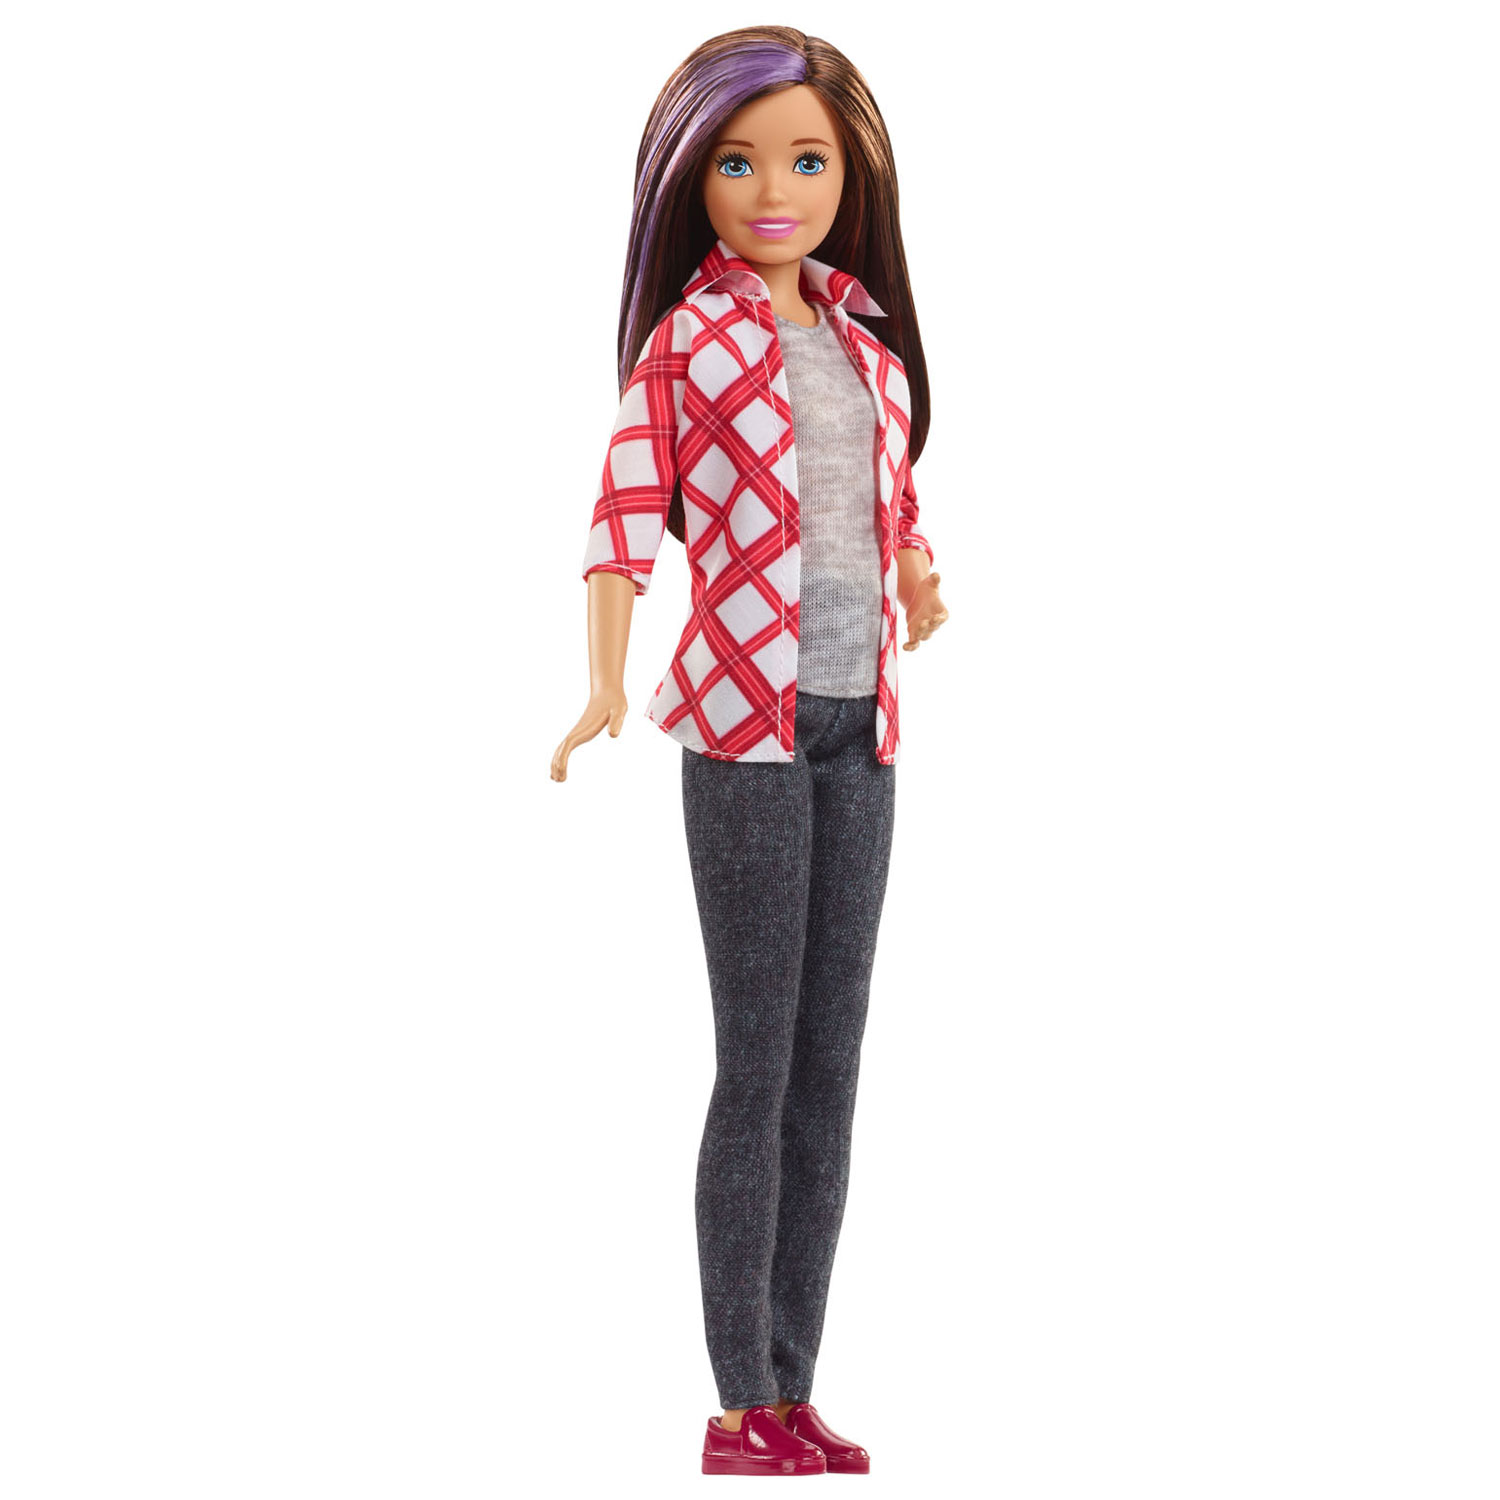 molen consensus Ontdek Barbie Dreamhouse Adventures Skipper in Checkered Blouse | Thimble Toys